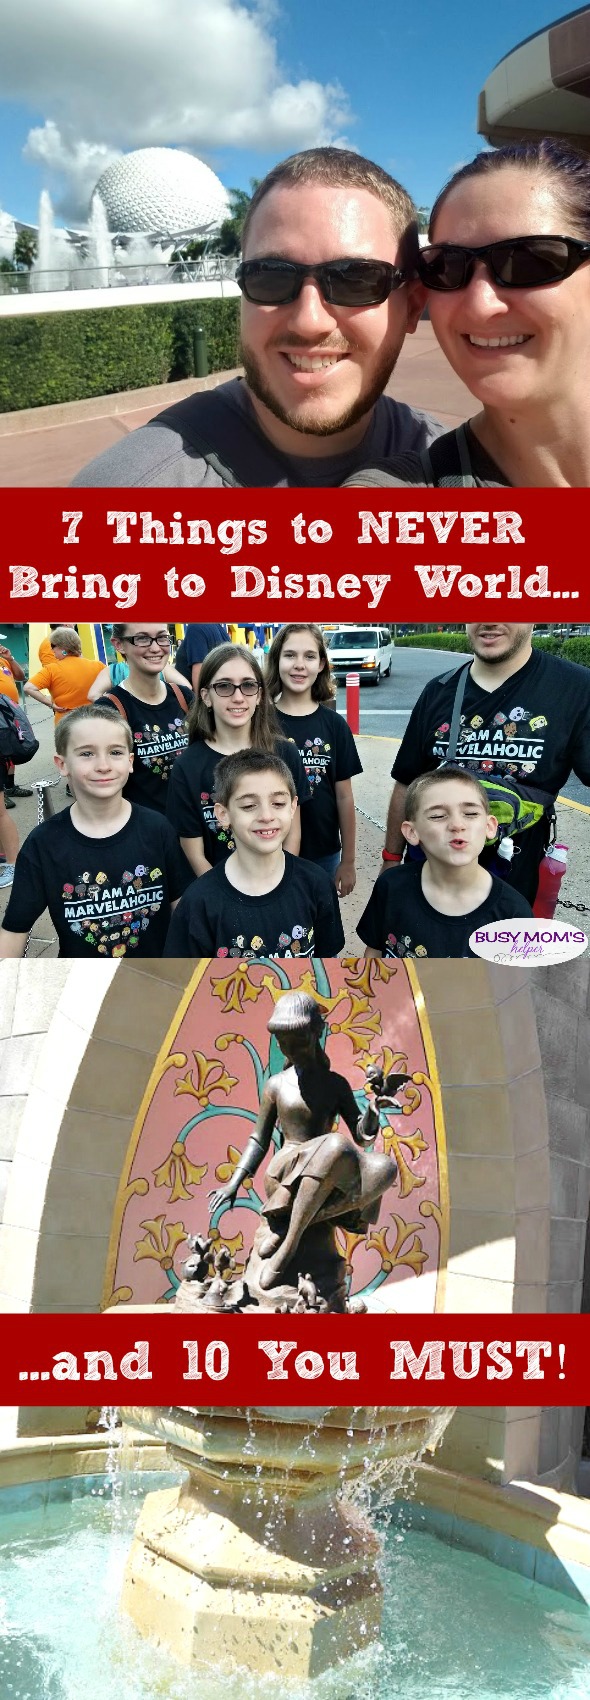 7 Things to NEVER Bring to Disney World + 10 You MUST! #disneyworld #familyvacation #wdw #disneyparks #disneytrip #waltdisneyworld #disneytips